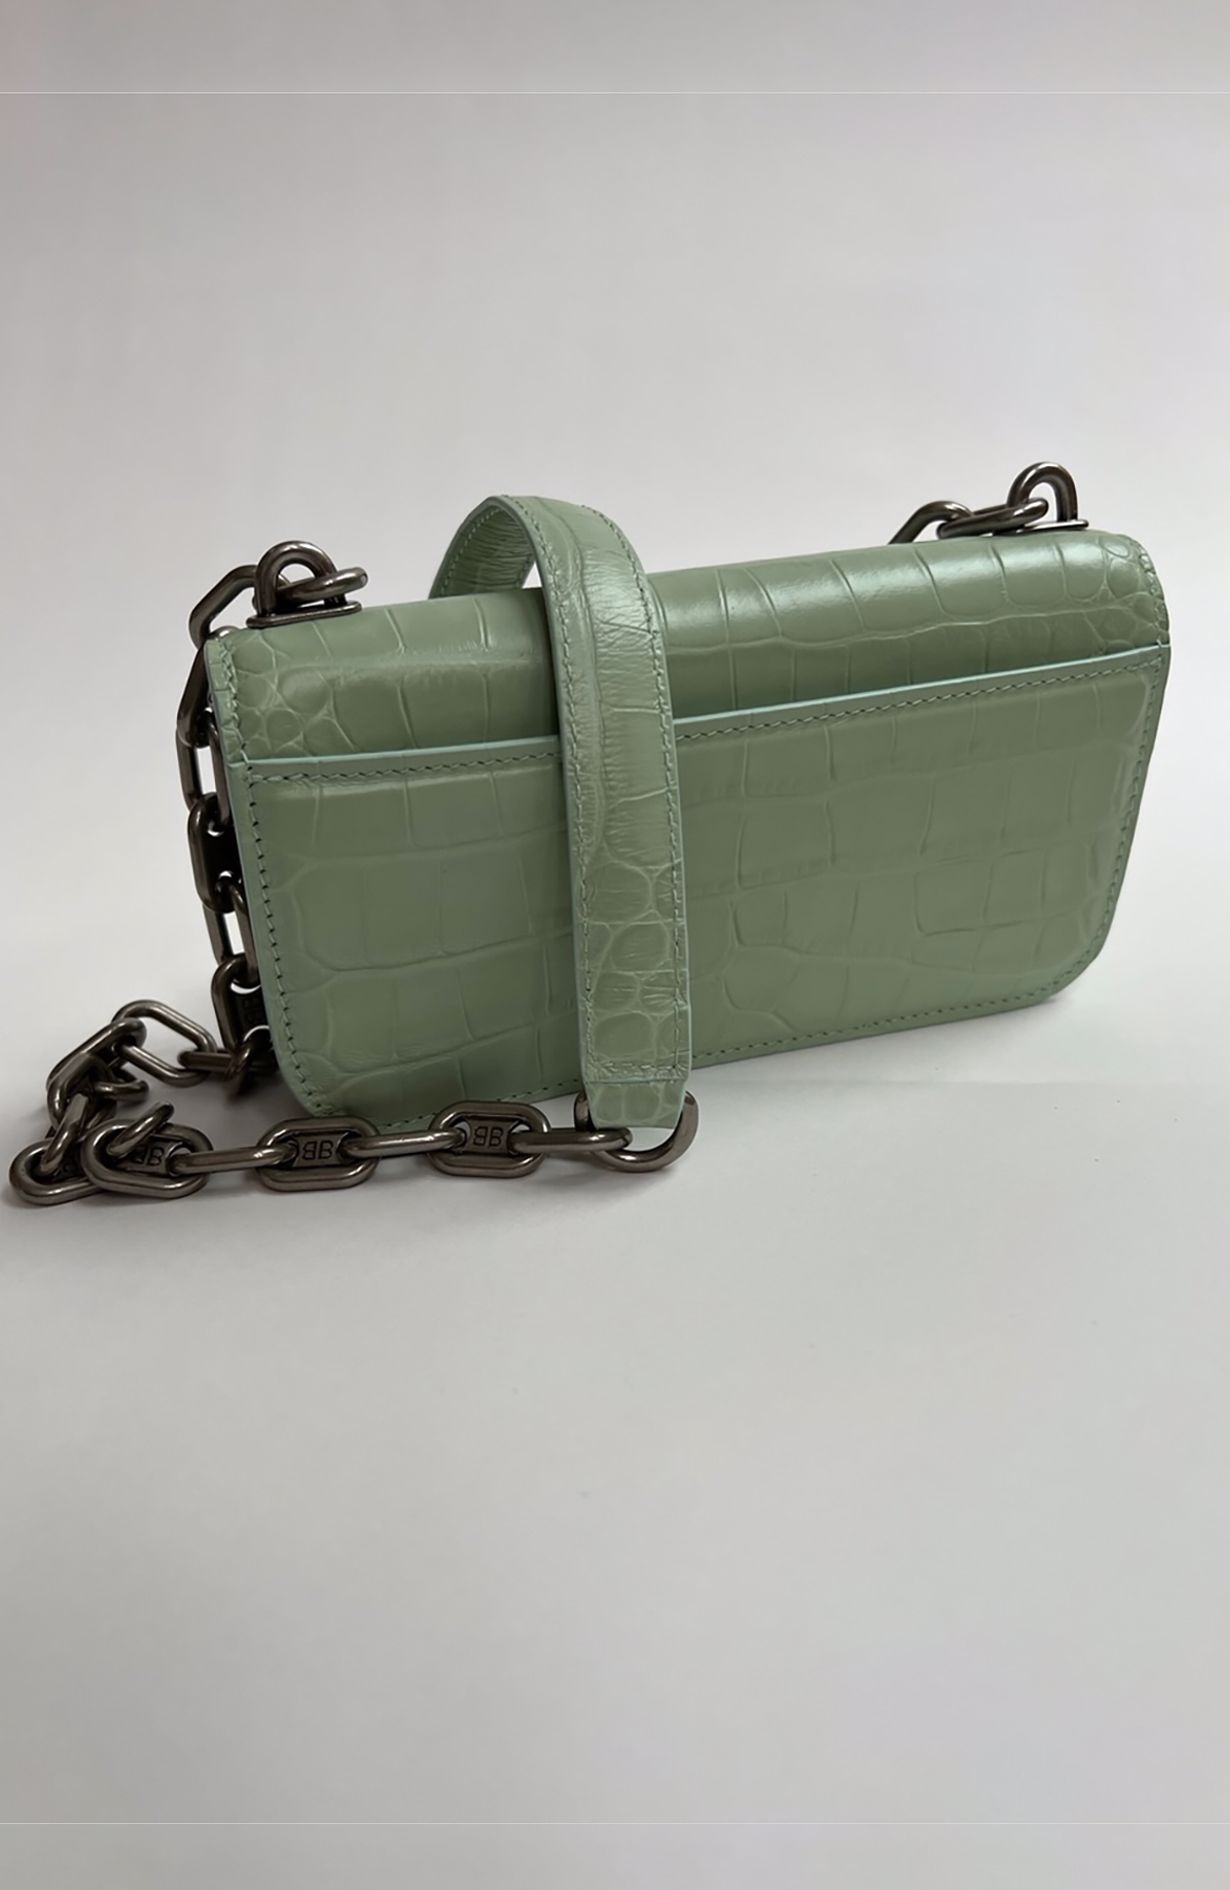 Balenciaga Gossip Bag - Size XS Green Croc 